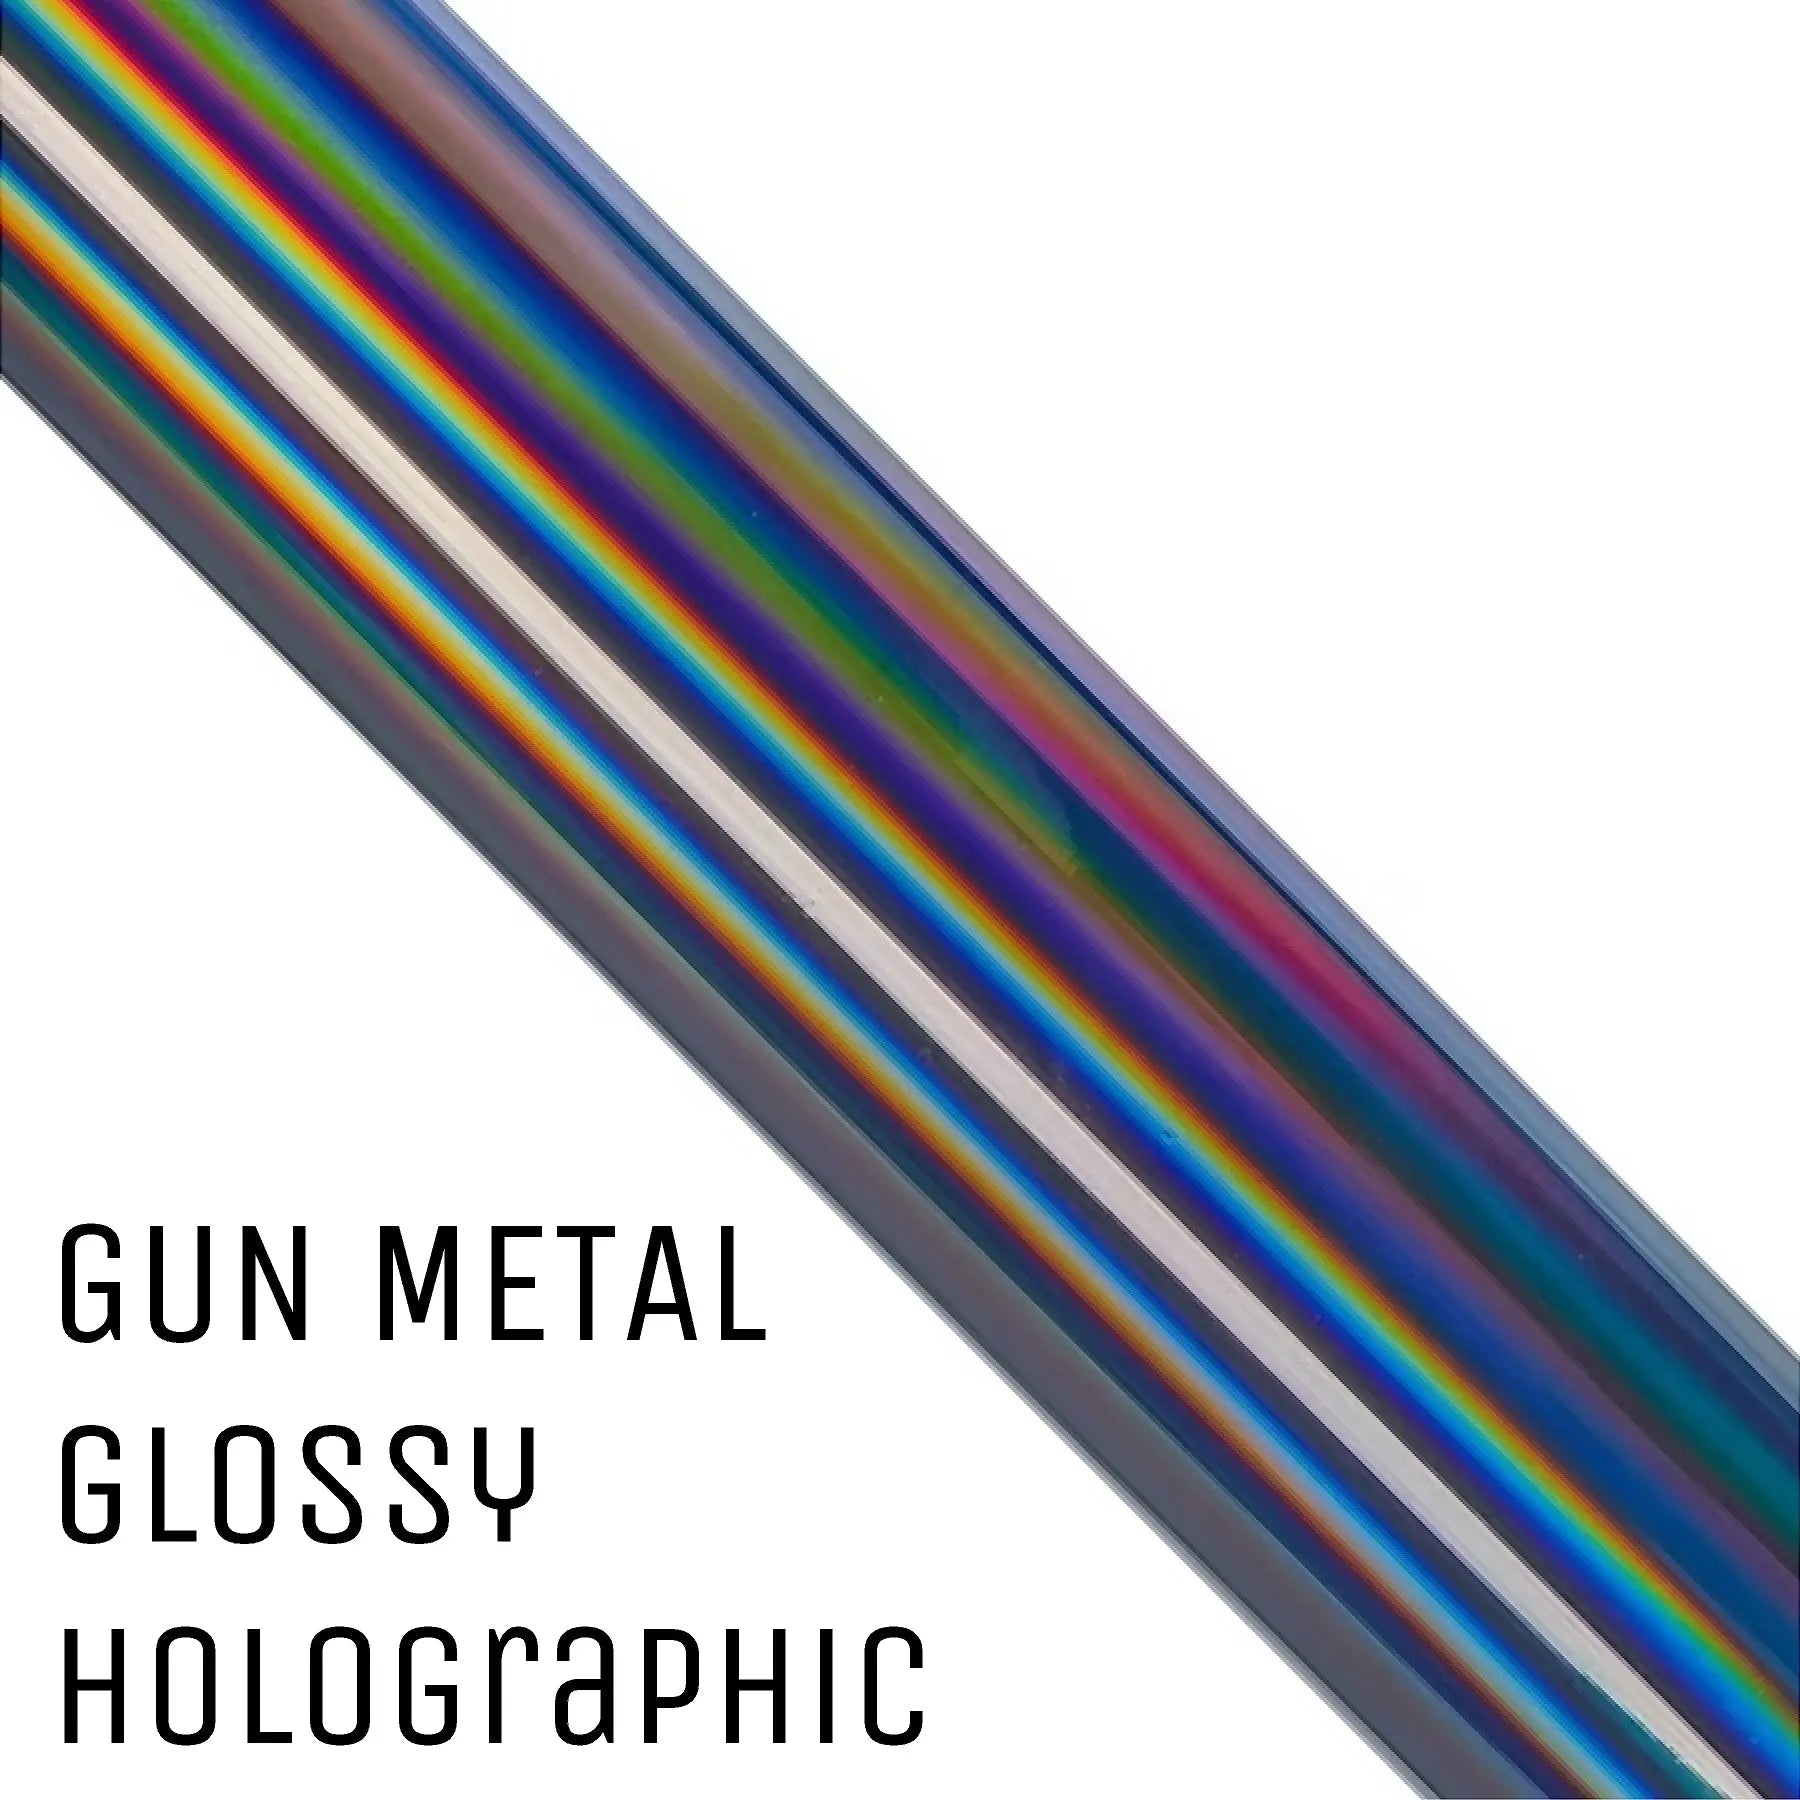 Glossy & Holographic Adhesive Vinyl Sheets - 12*12, 30packs